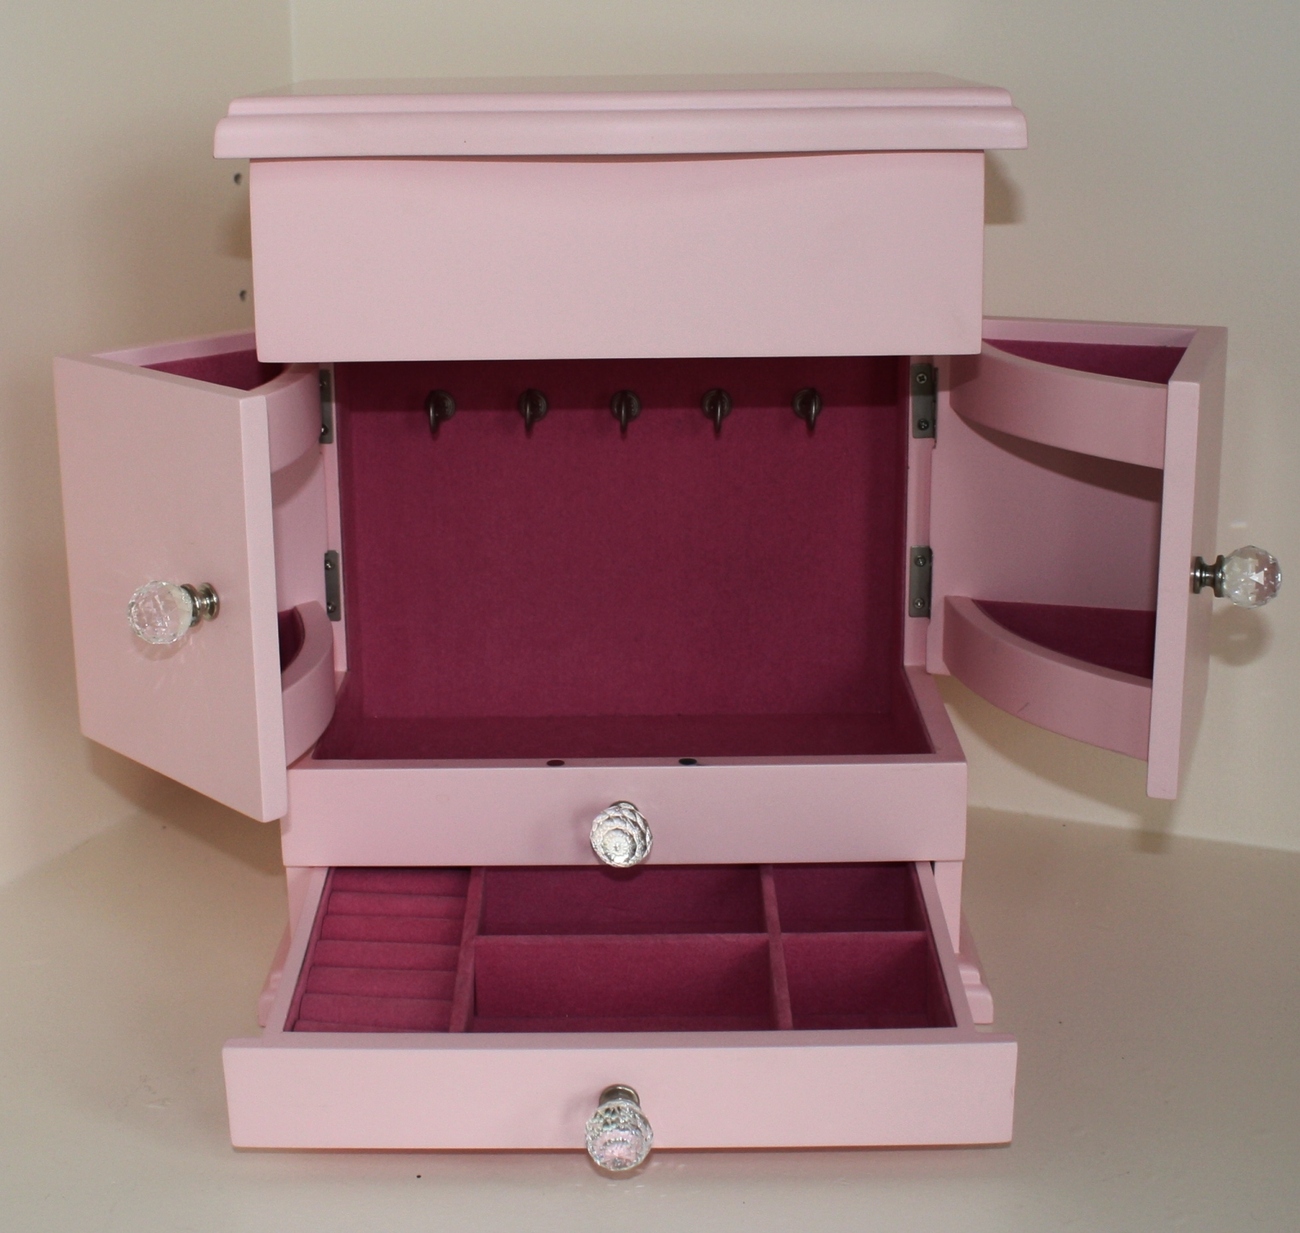 Pottery Barn Kids Teens Jewelry Box Medium Size Pink Wood